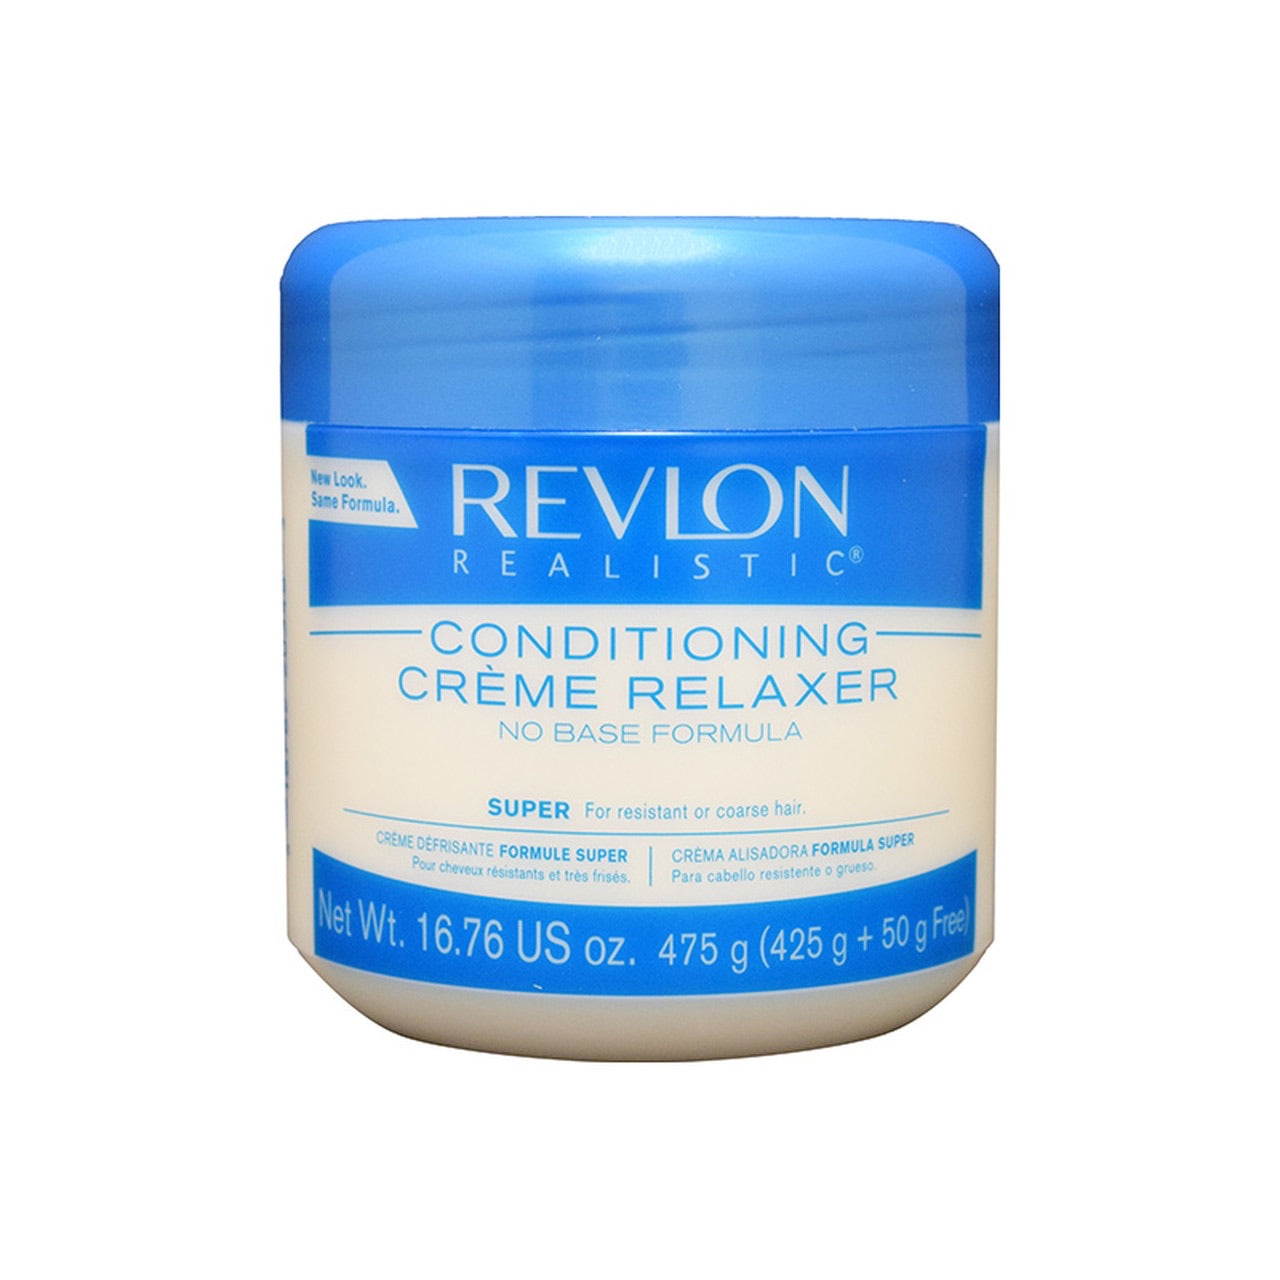 Revlon realistic conditioning creme relaxer regular/super 475g